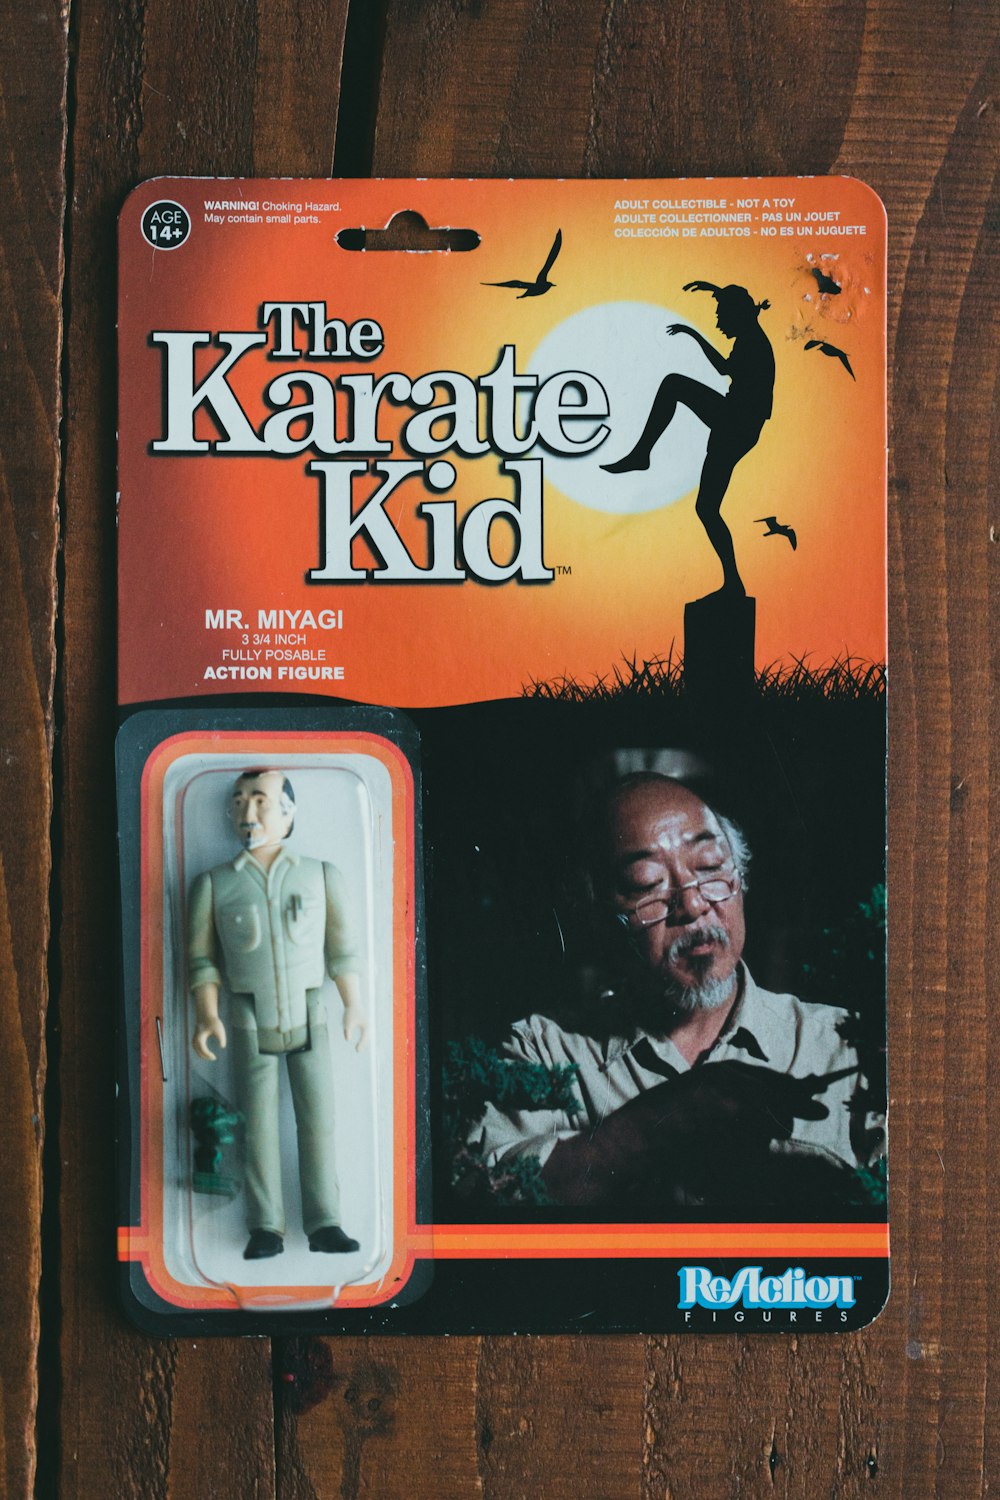 the karate kid action figure is on display